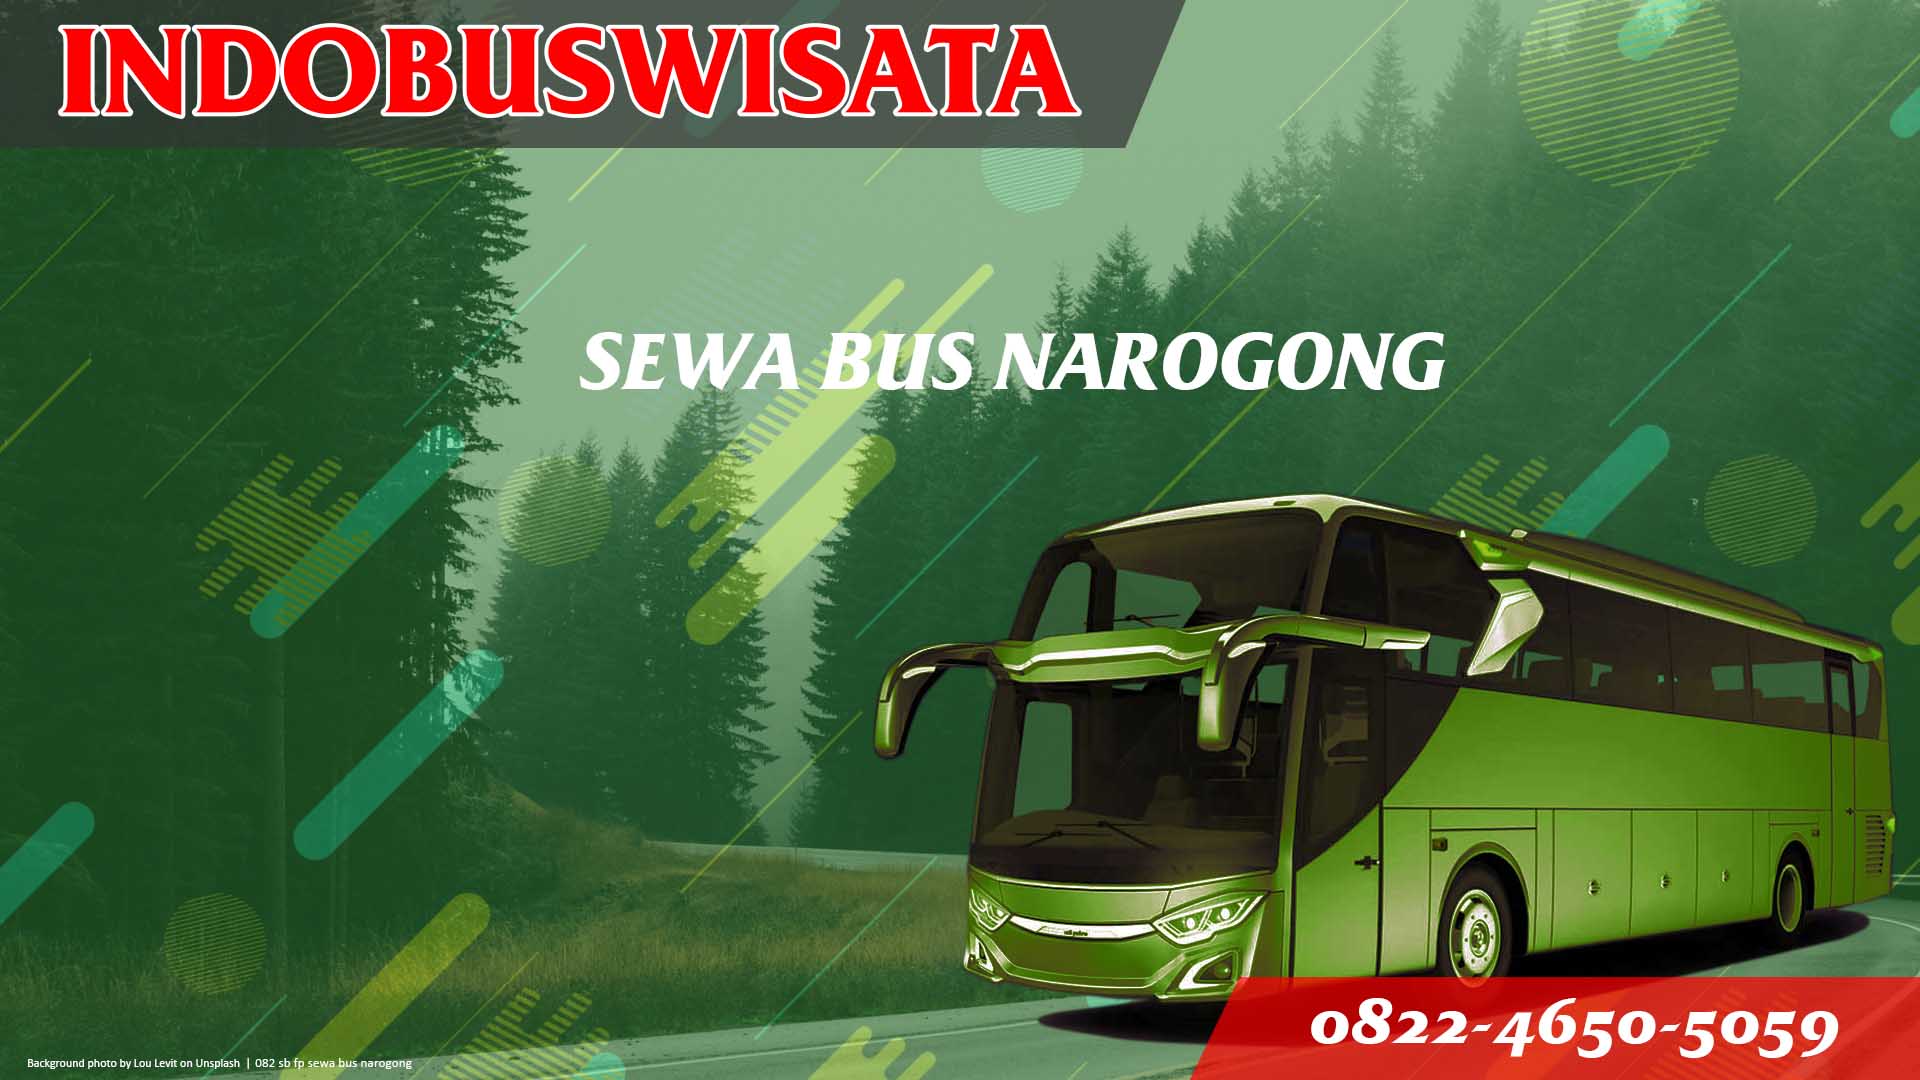 082 Sb Fp Sewa Bus Narogong Jb 3 Hdd Indobuswisata